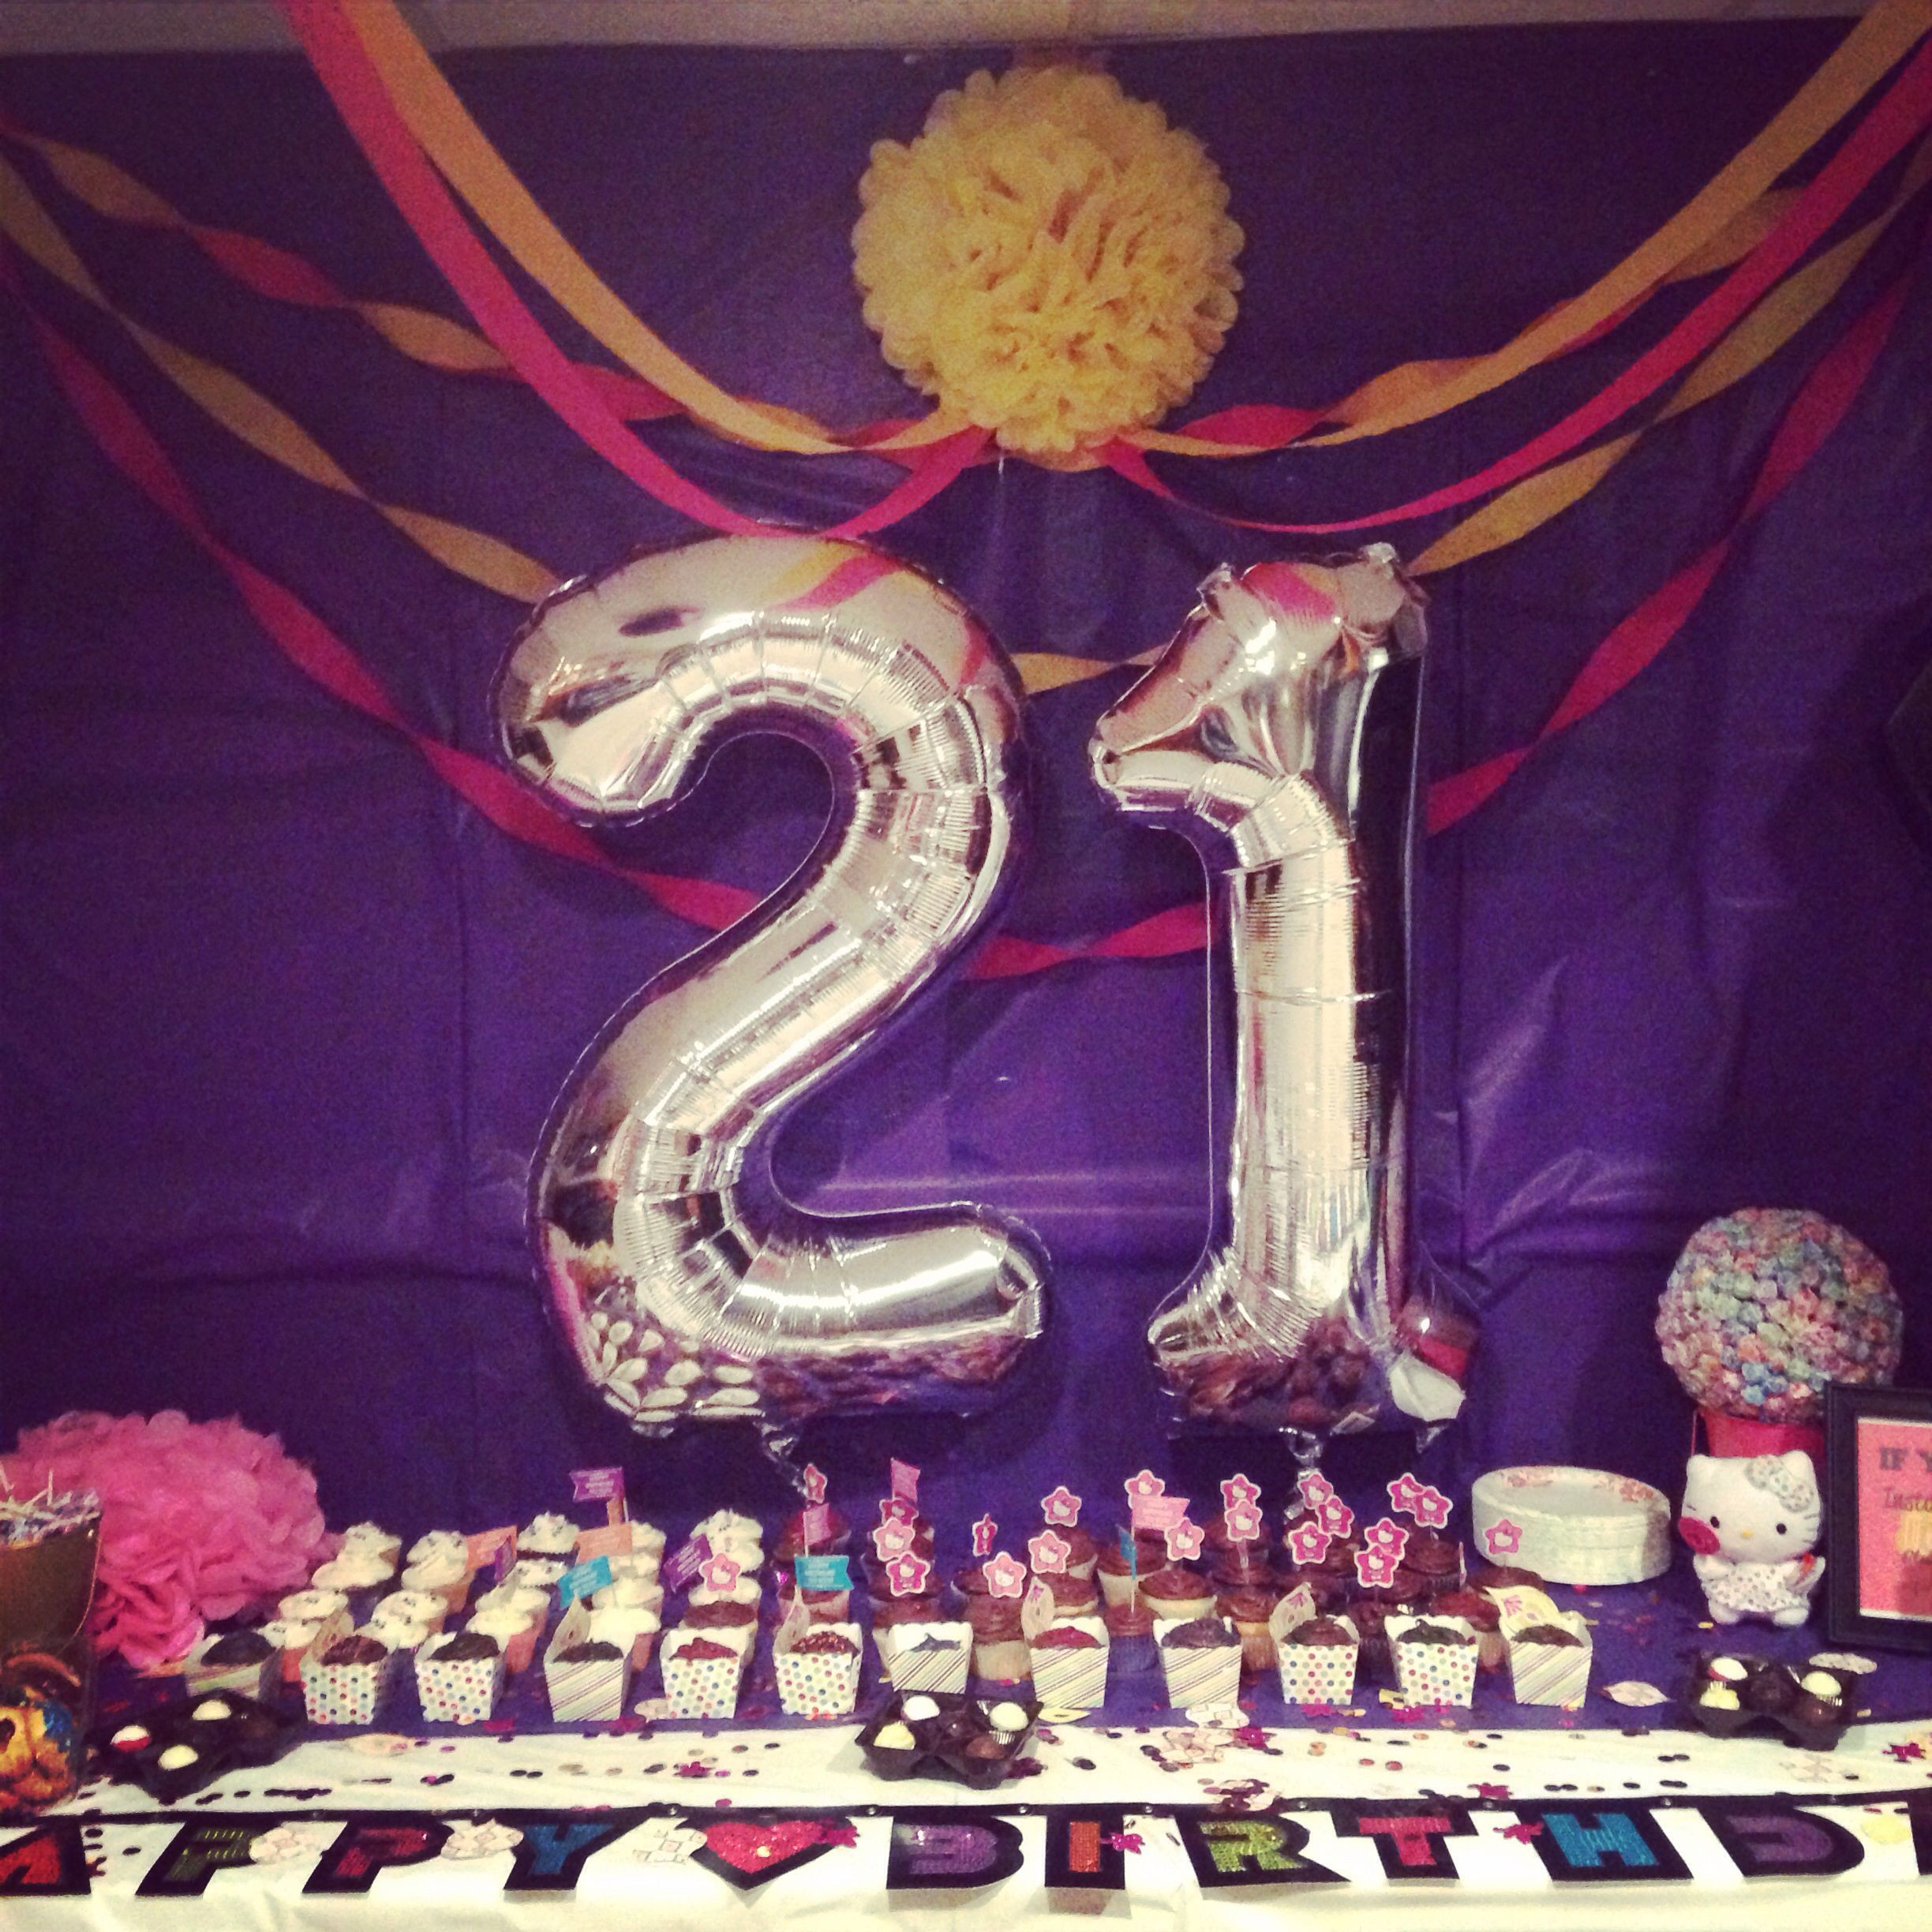 21st Birthday Decorations
 Best 25 21st birthday decorations ideas on Pinterest